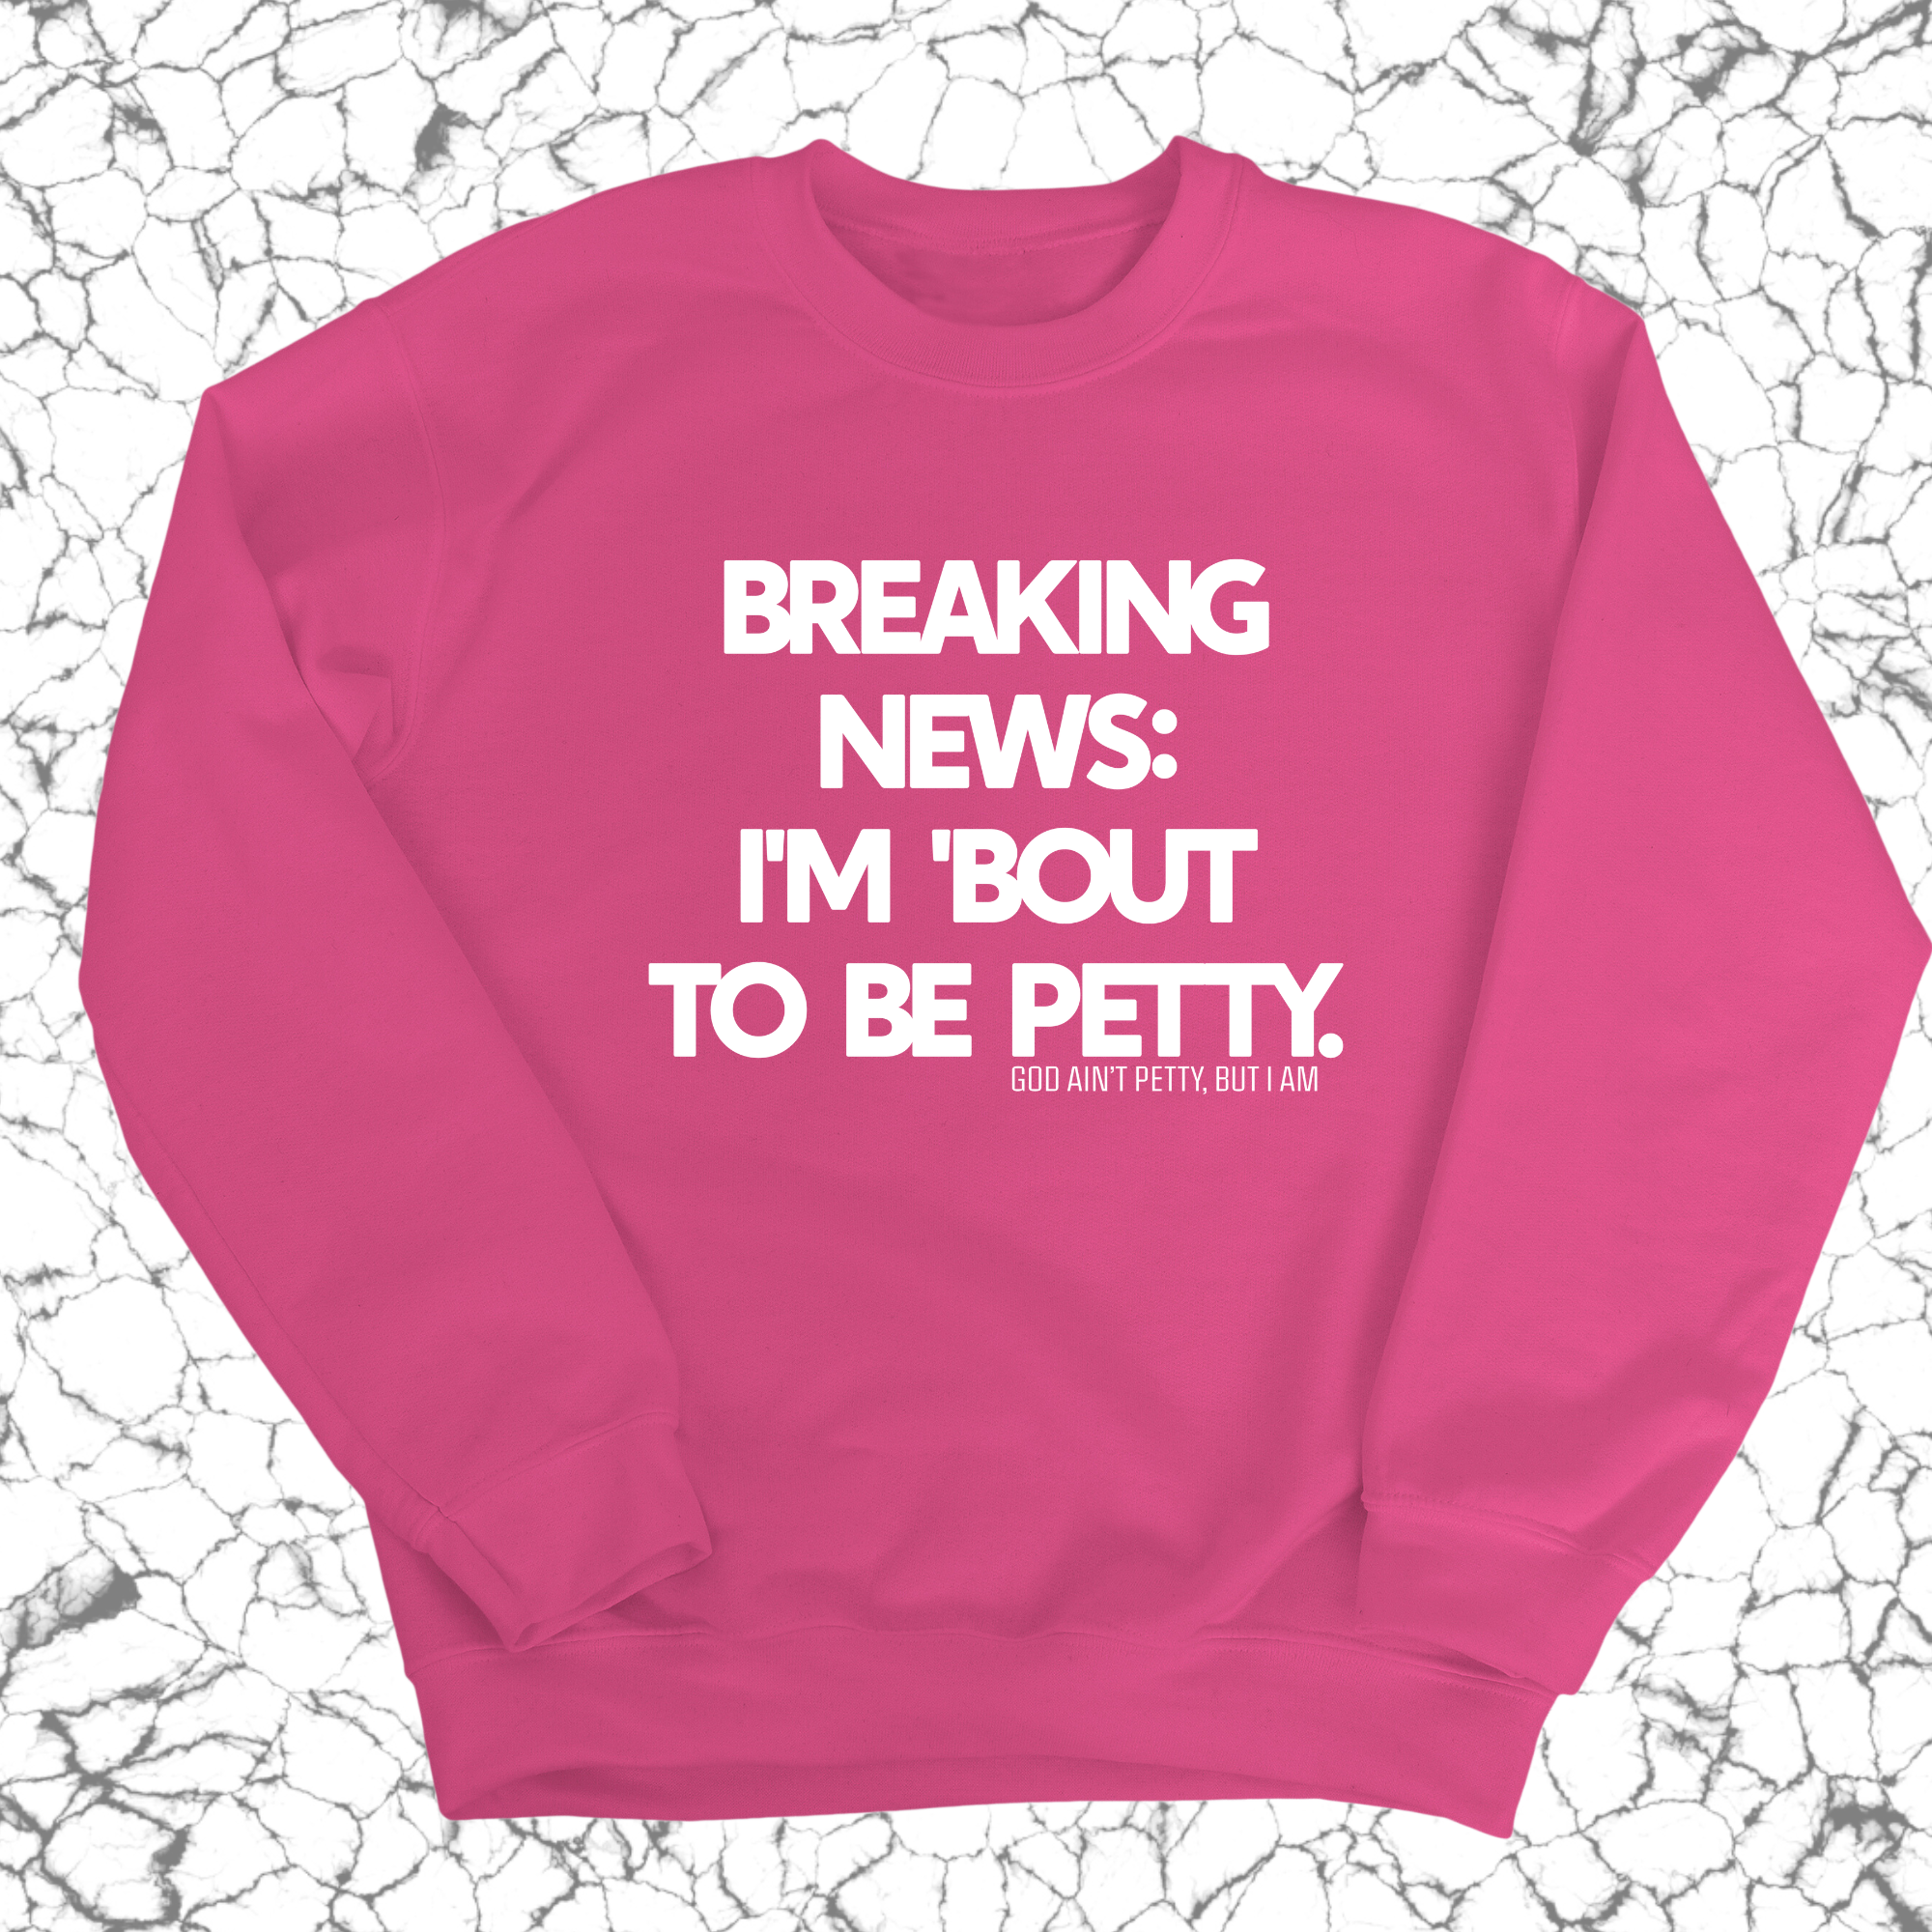 Breaking News: I'm 'bout to be Petty Unisex Sweatshirt-Sweatshirt-The Original God Ain't Petty But I Am